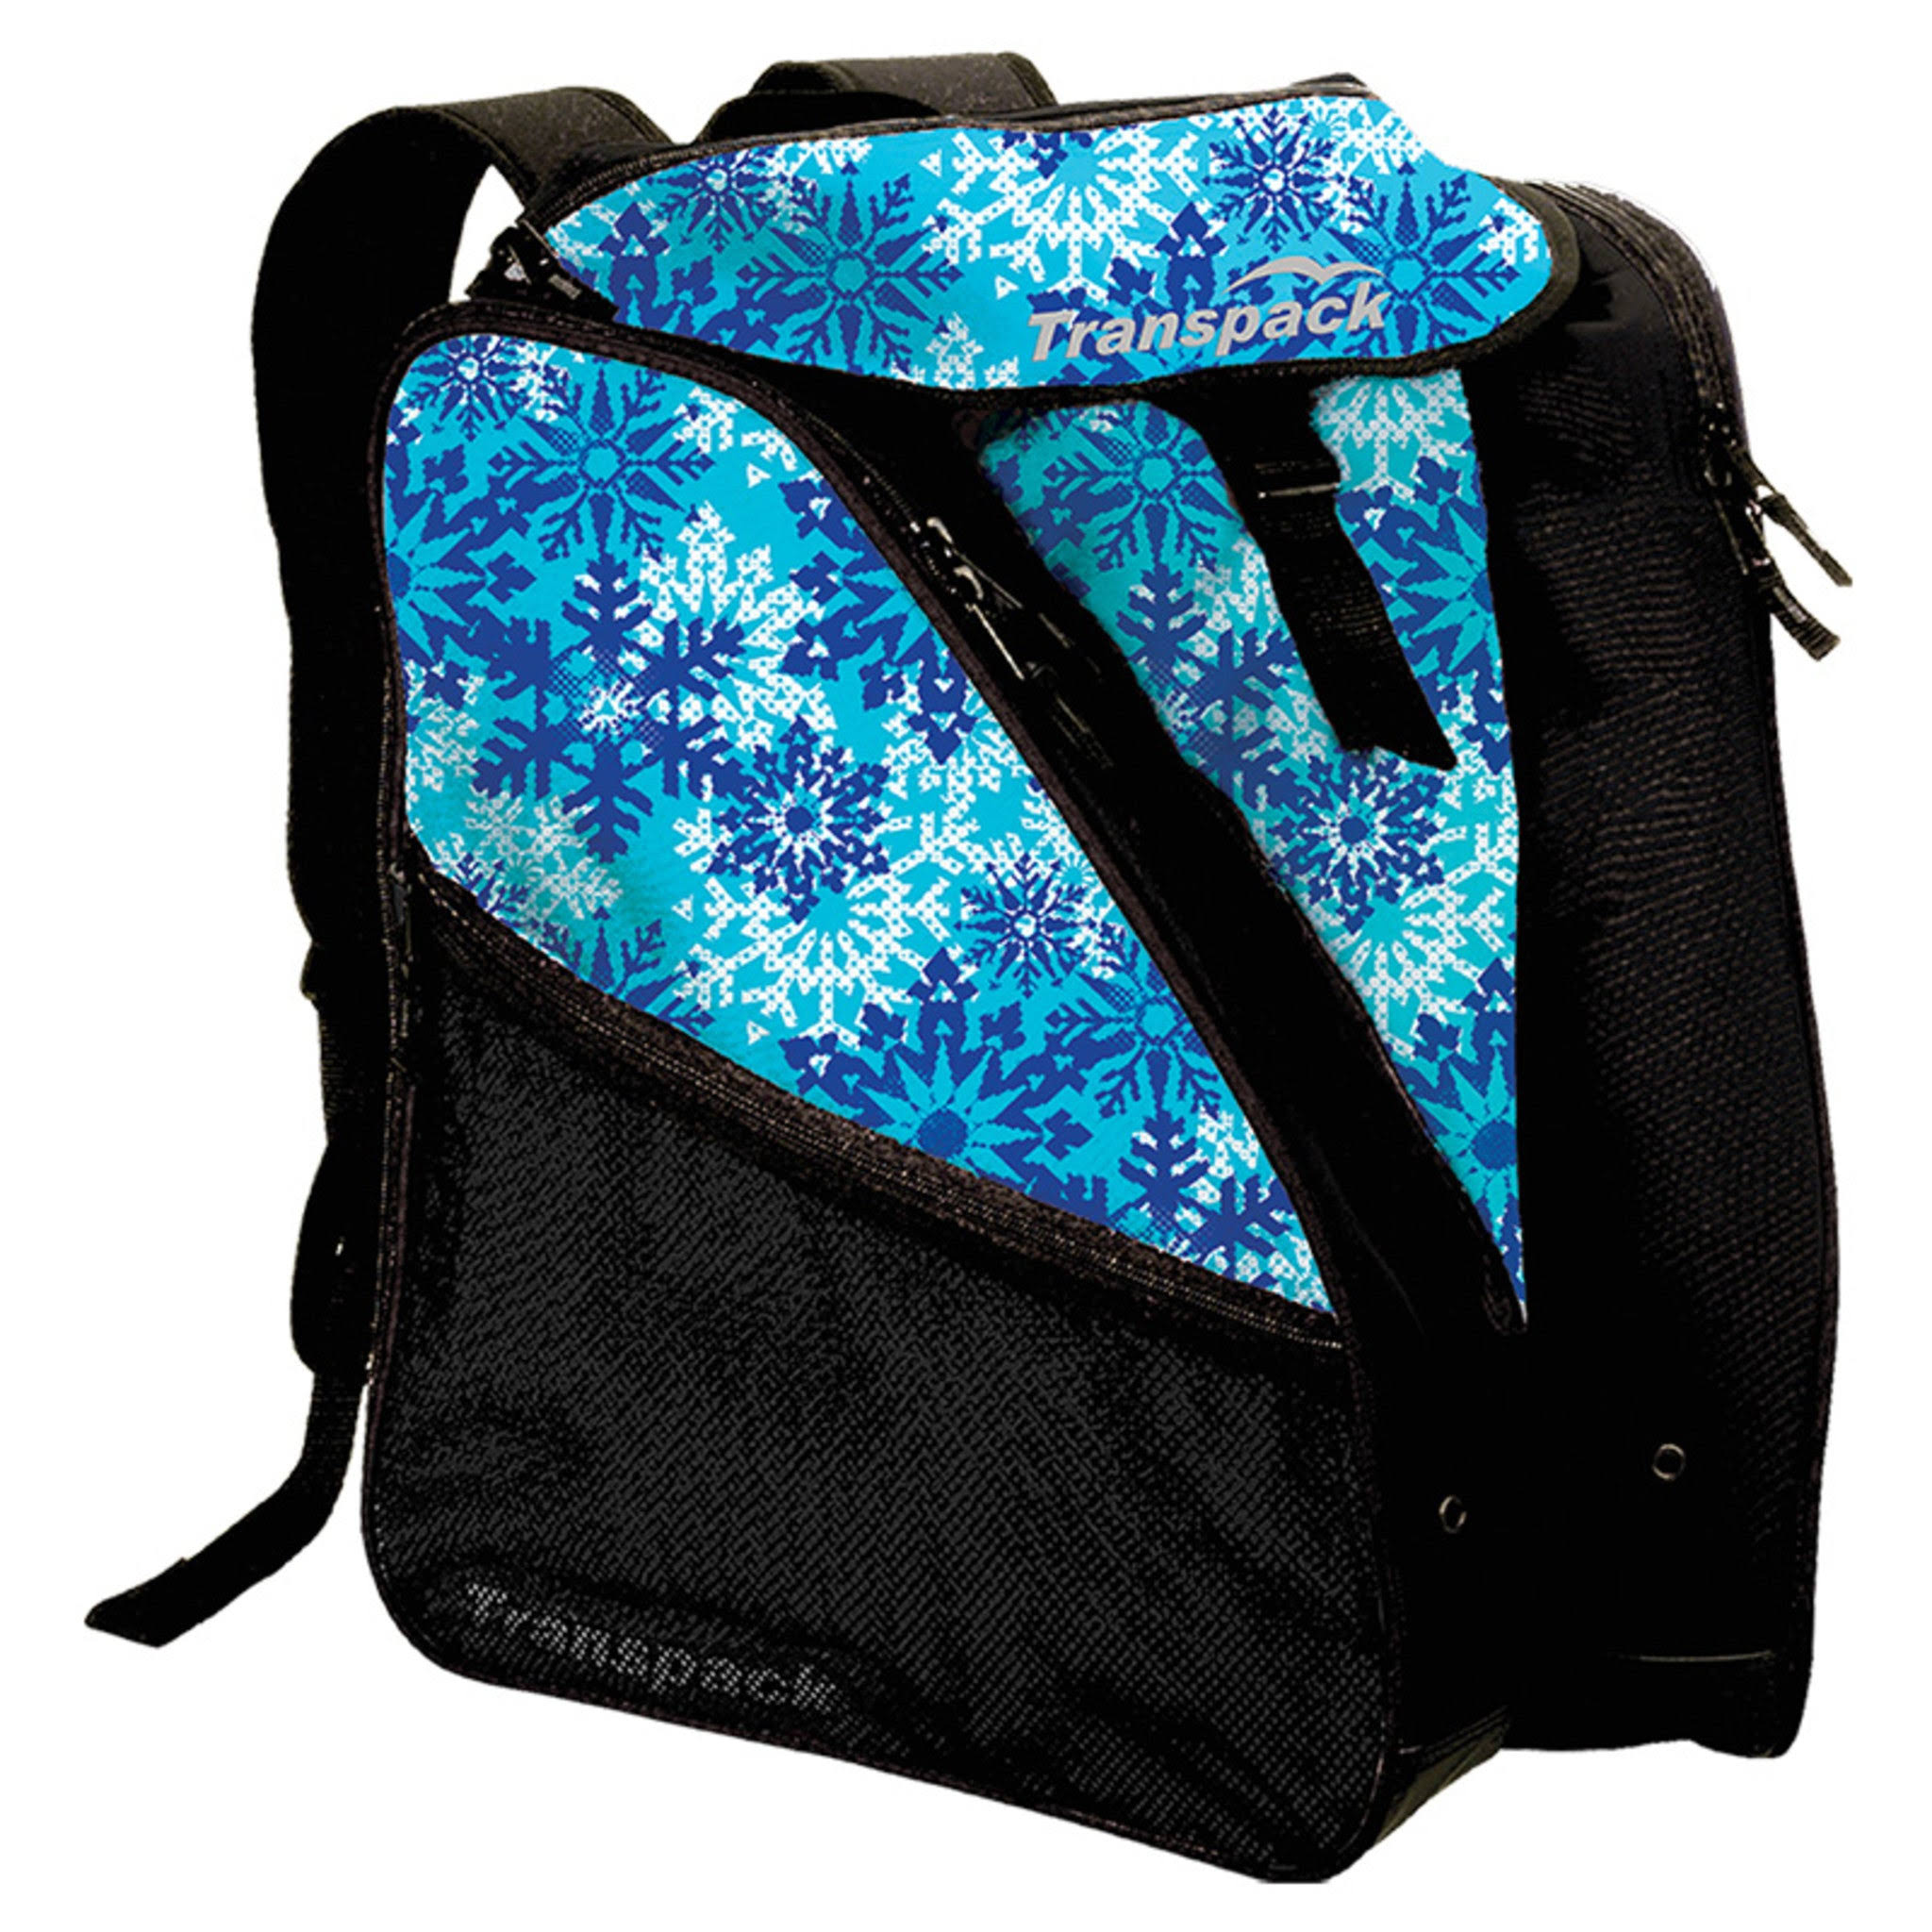 Transpack XTW Ski Boot Bag - Aqua Snowflake